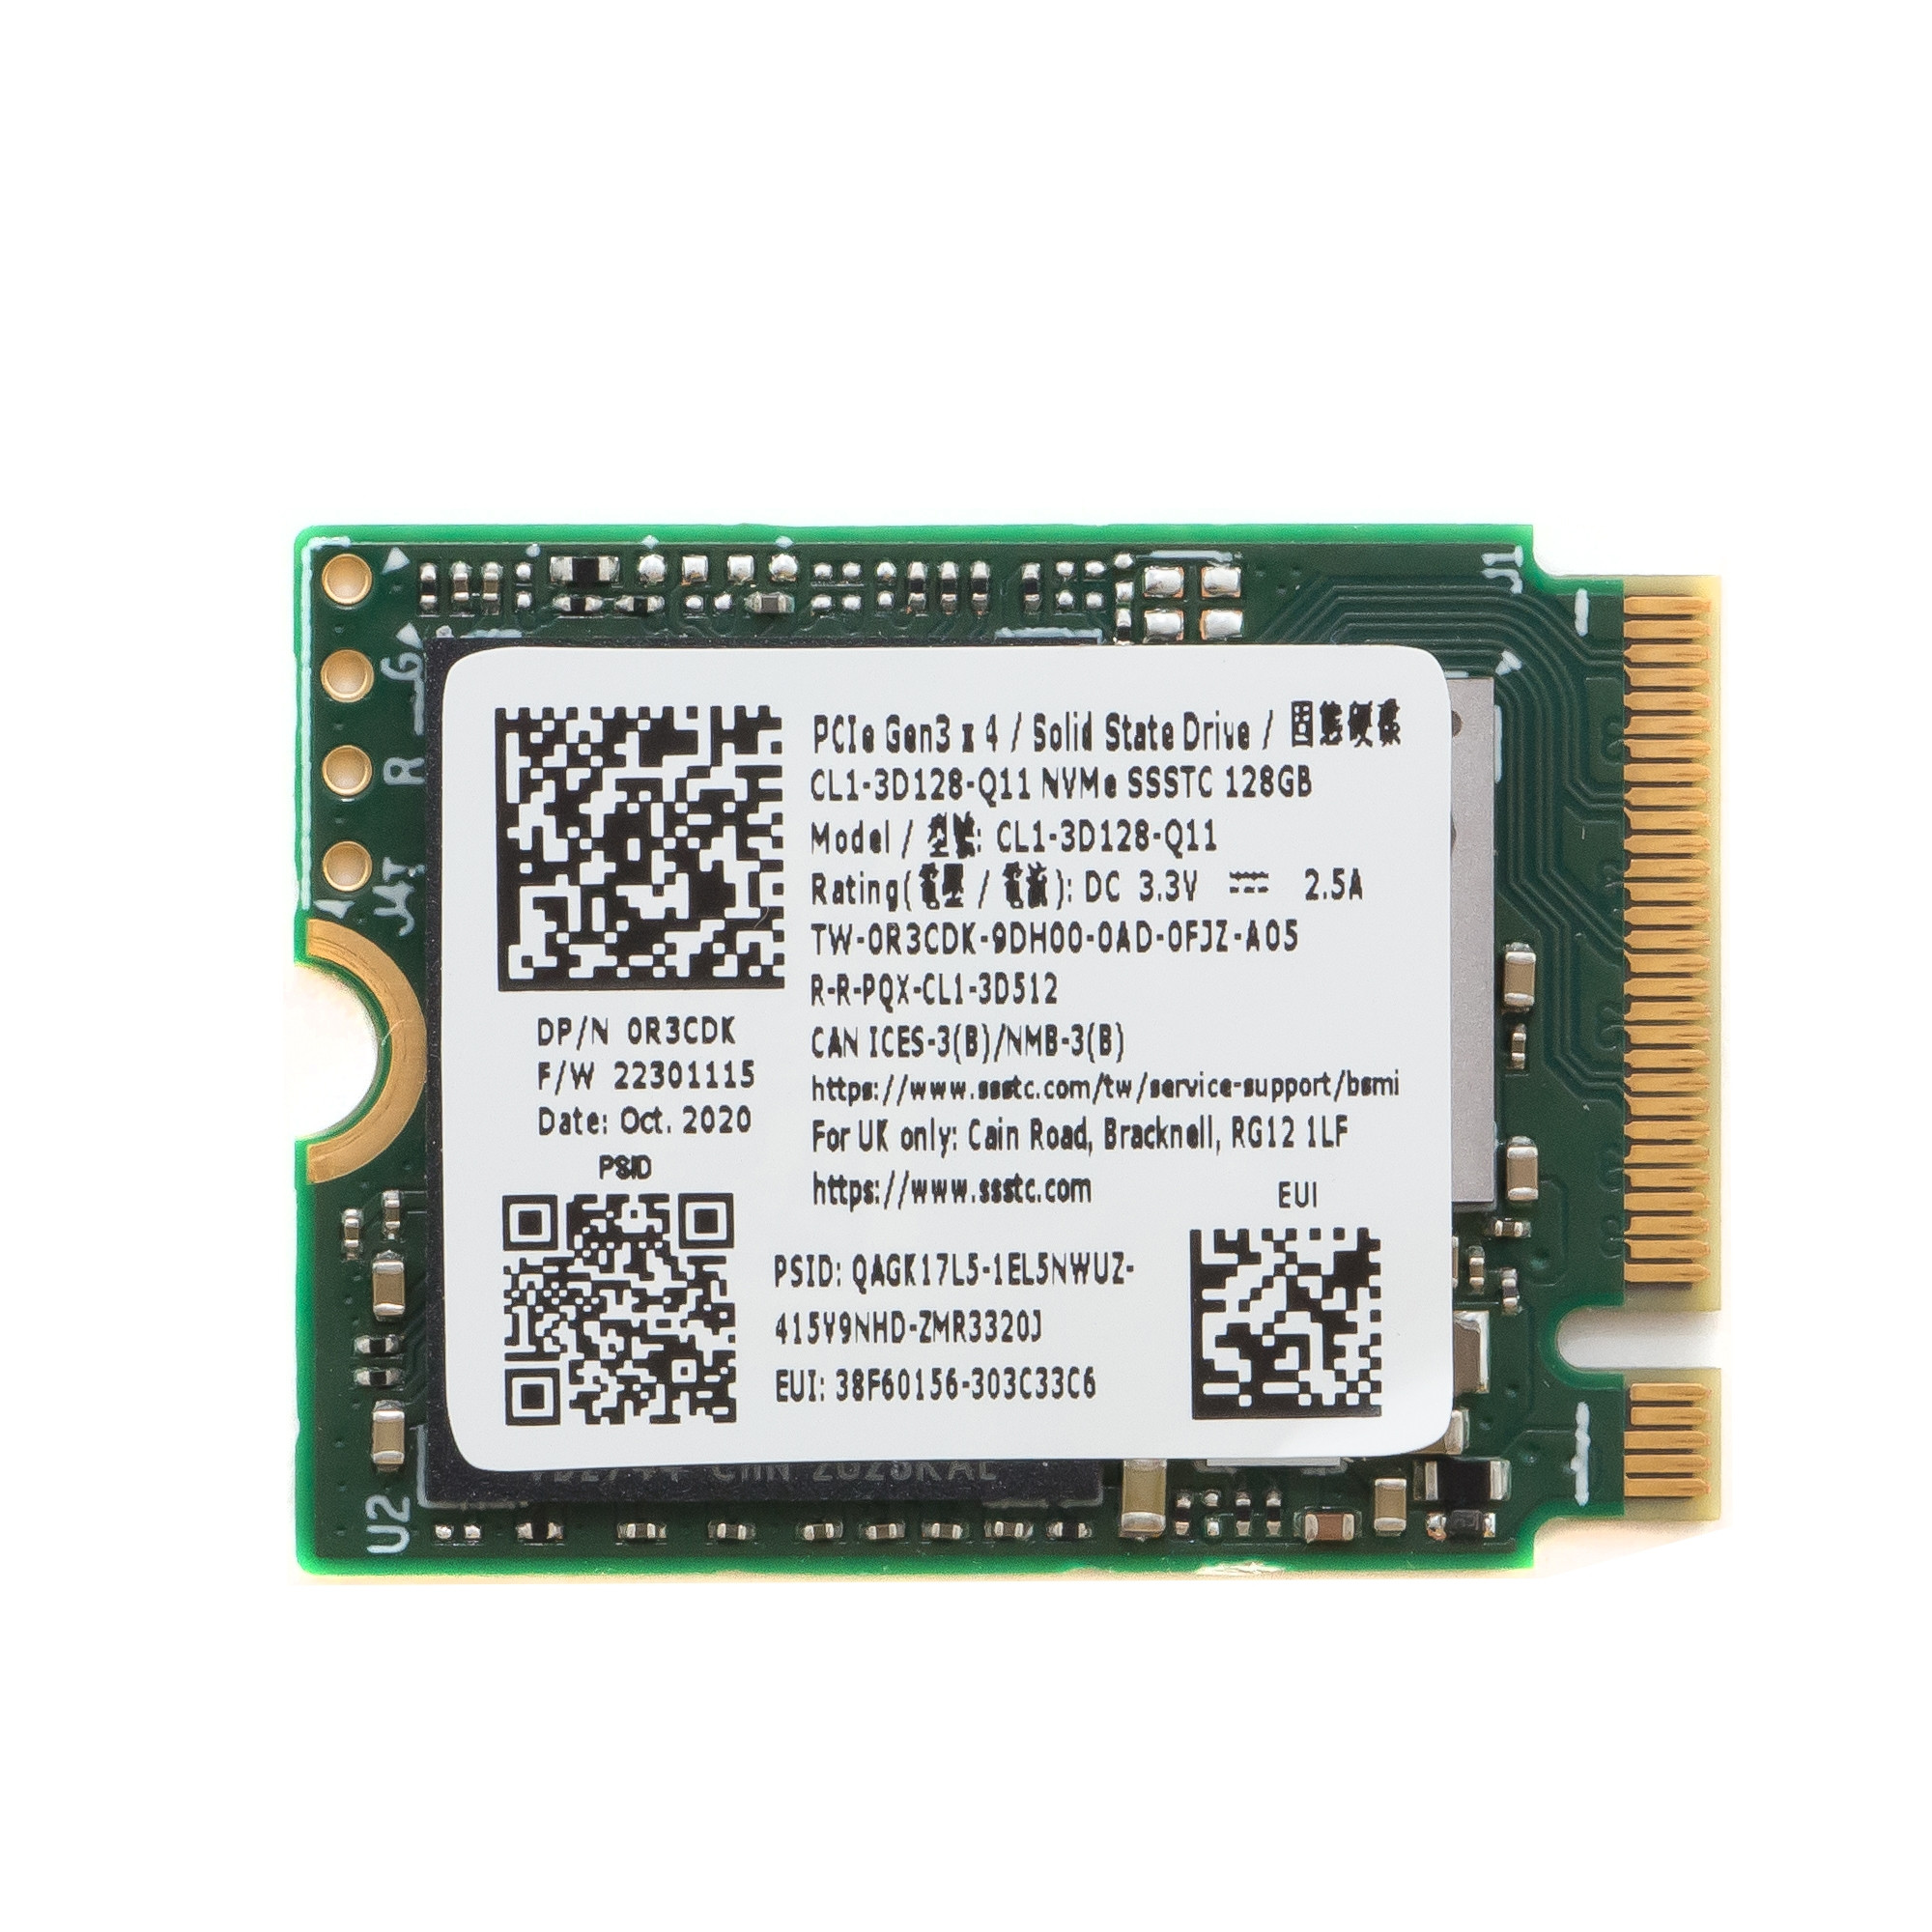 Купить жесткий диск SSD M.2 2230 NVME 128Gb SSSTC CL1-3D128-Q11